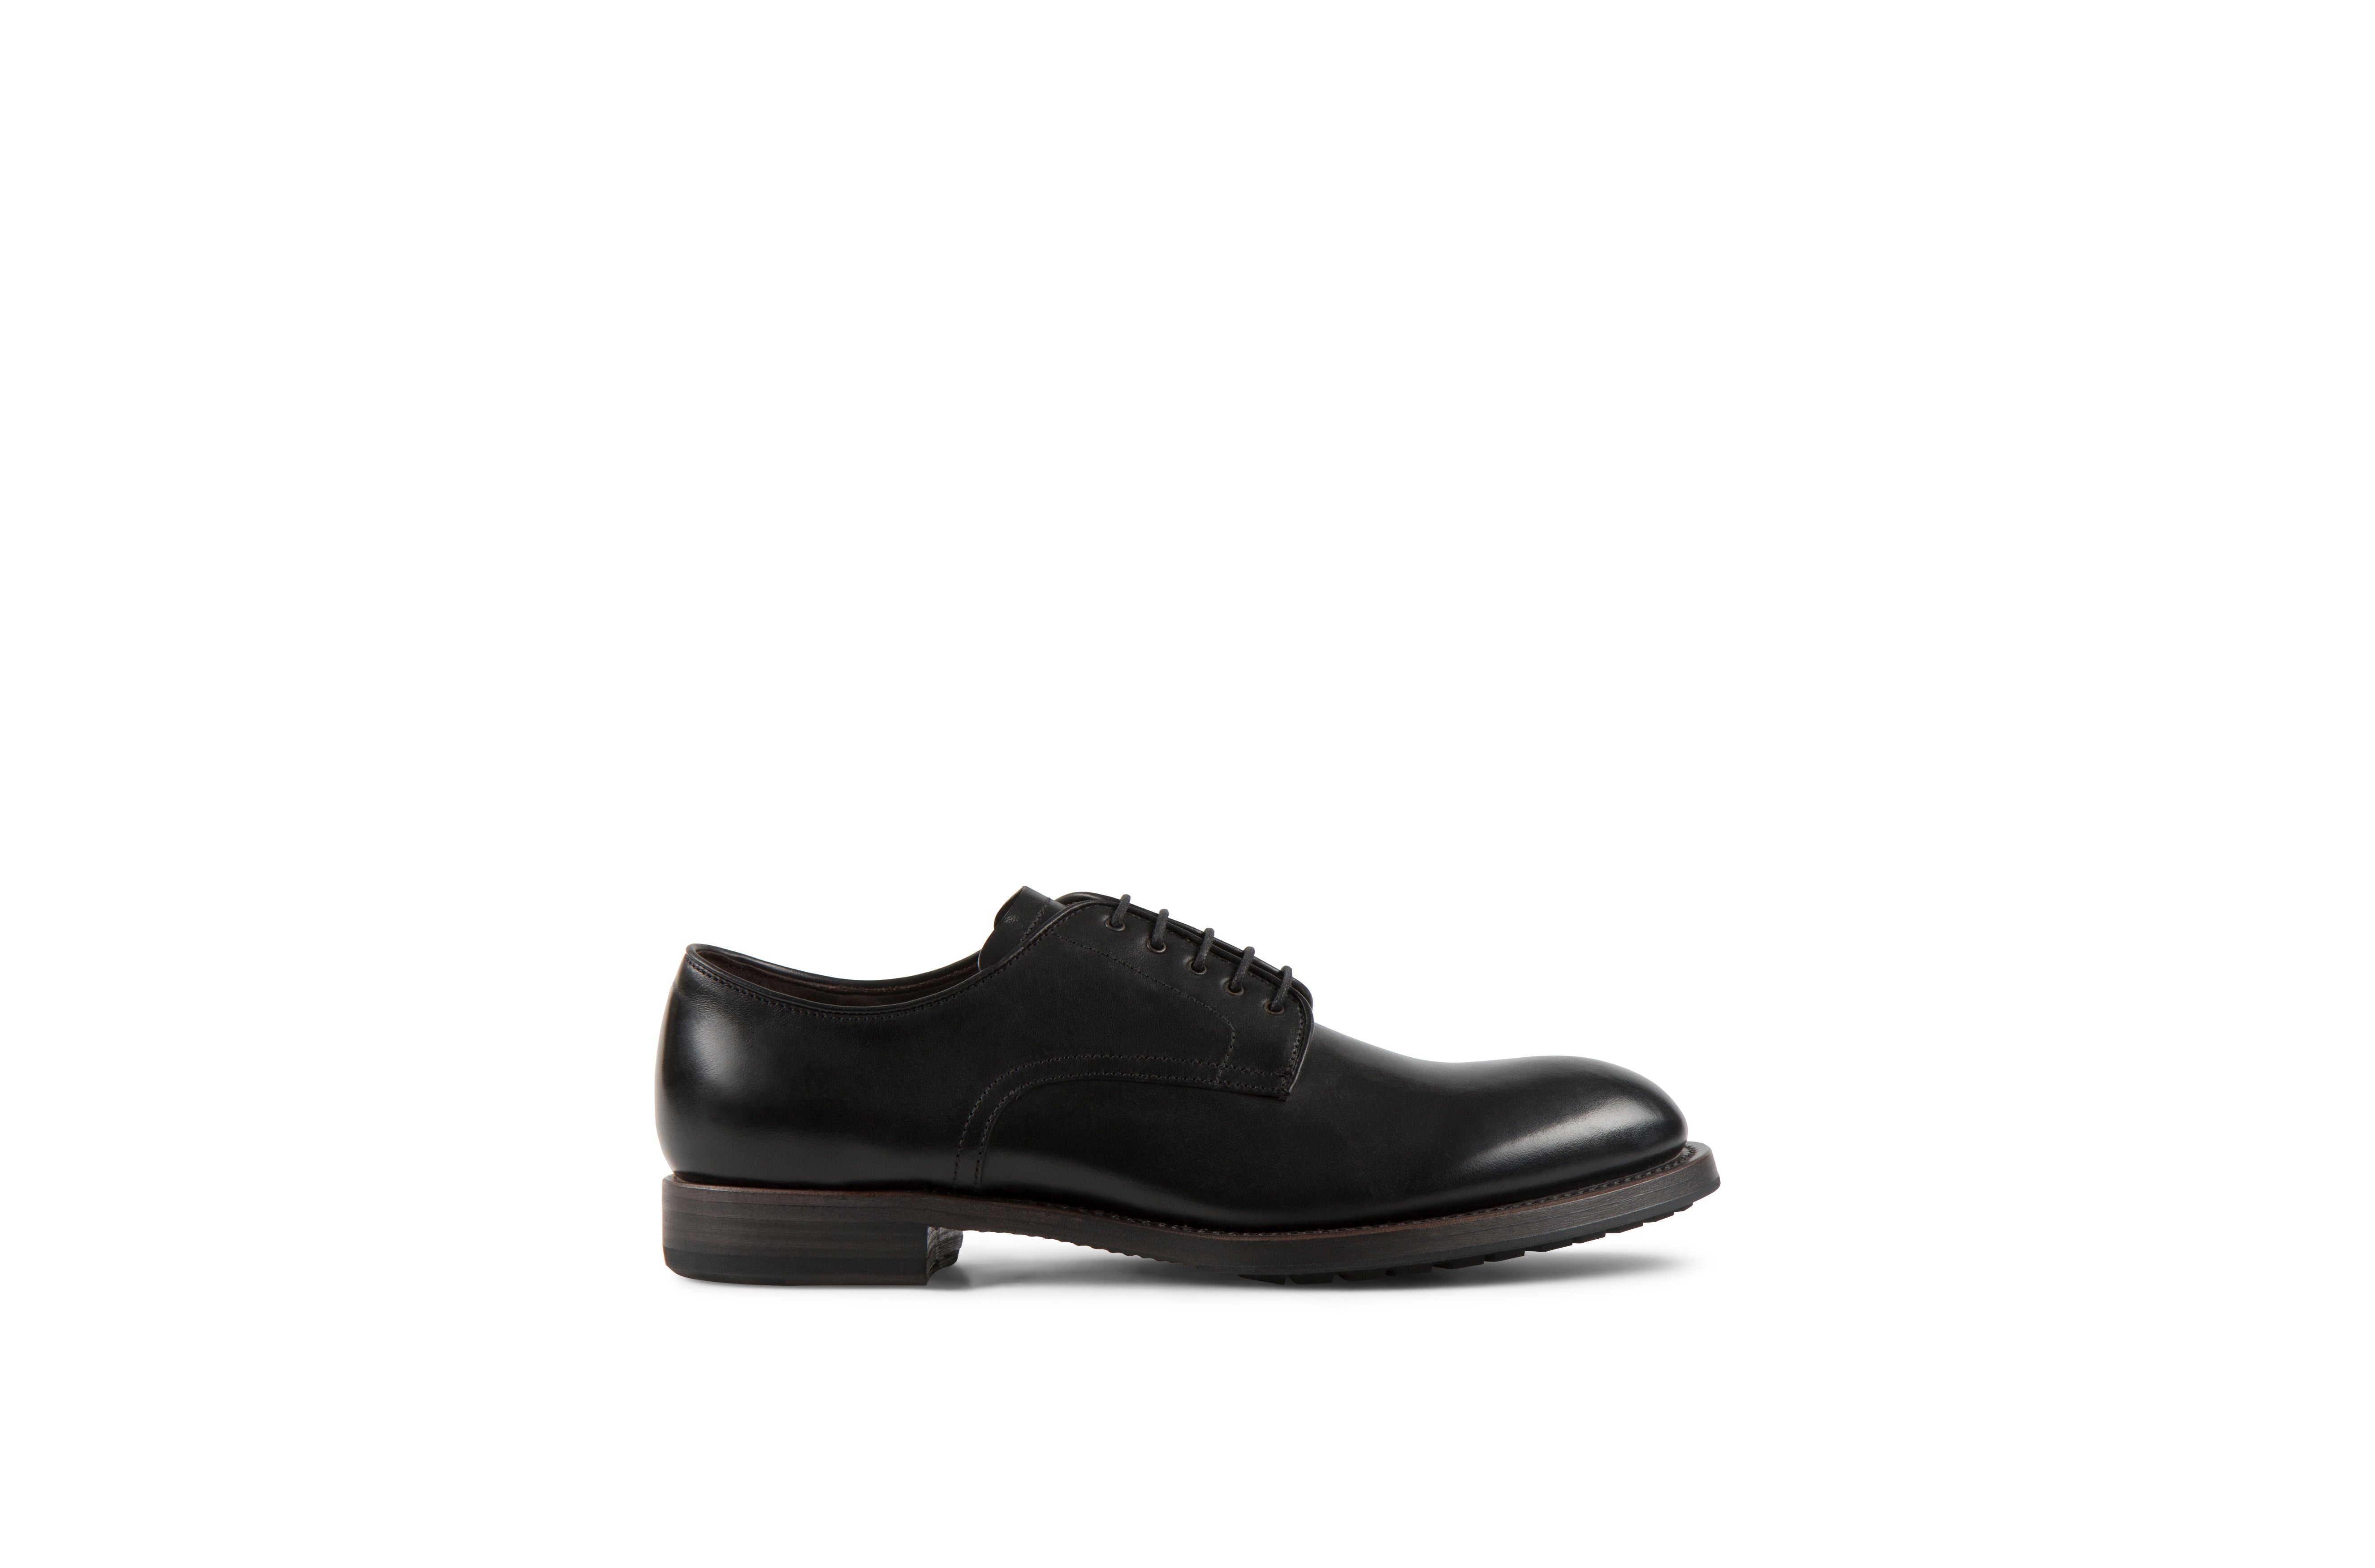 Daze Black Cordovan Leather Shoes